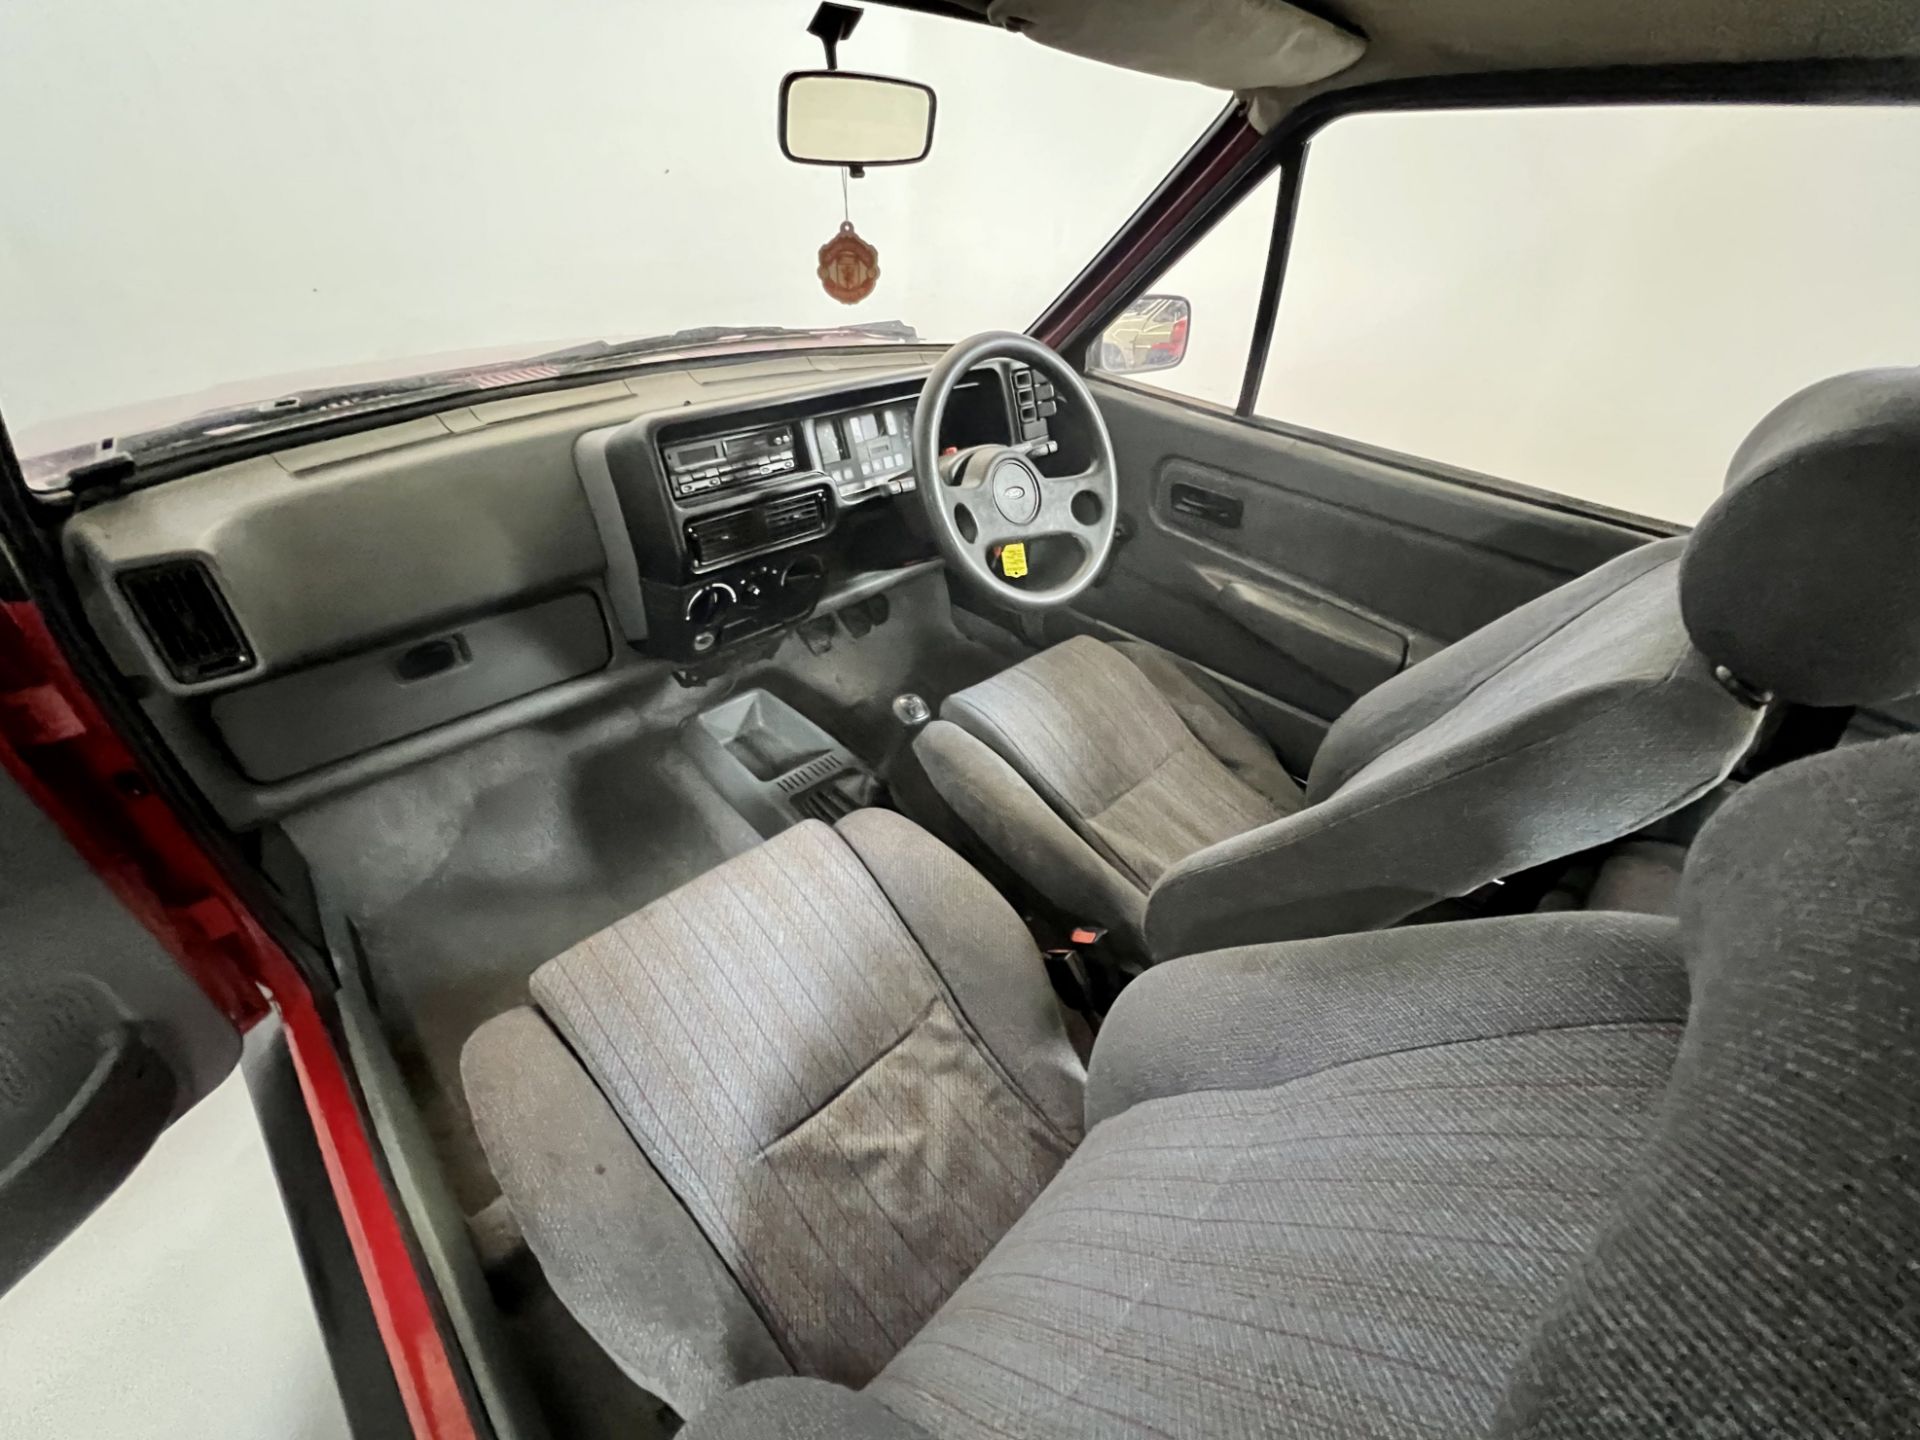 Ford Fiesta XR2 Replica - Image 23 of 30